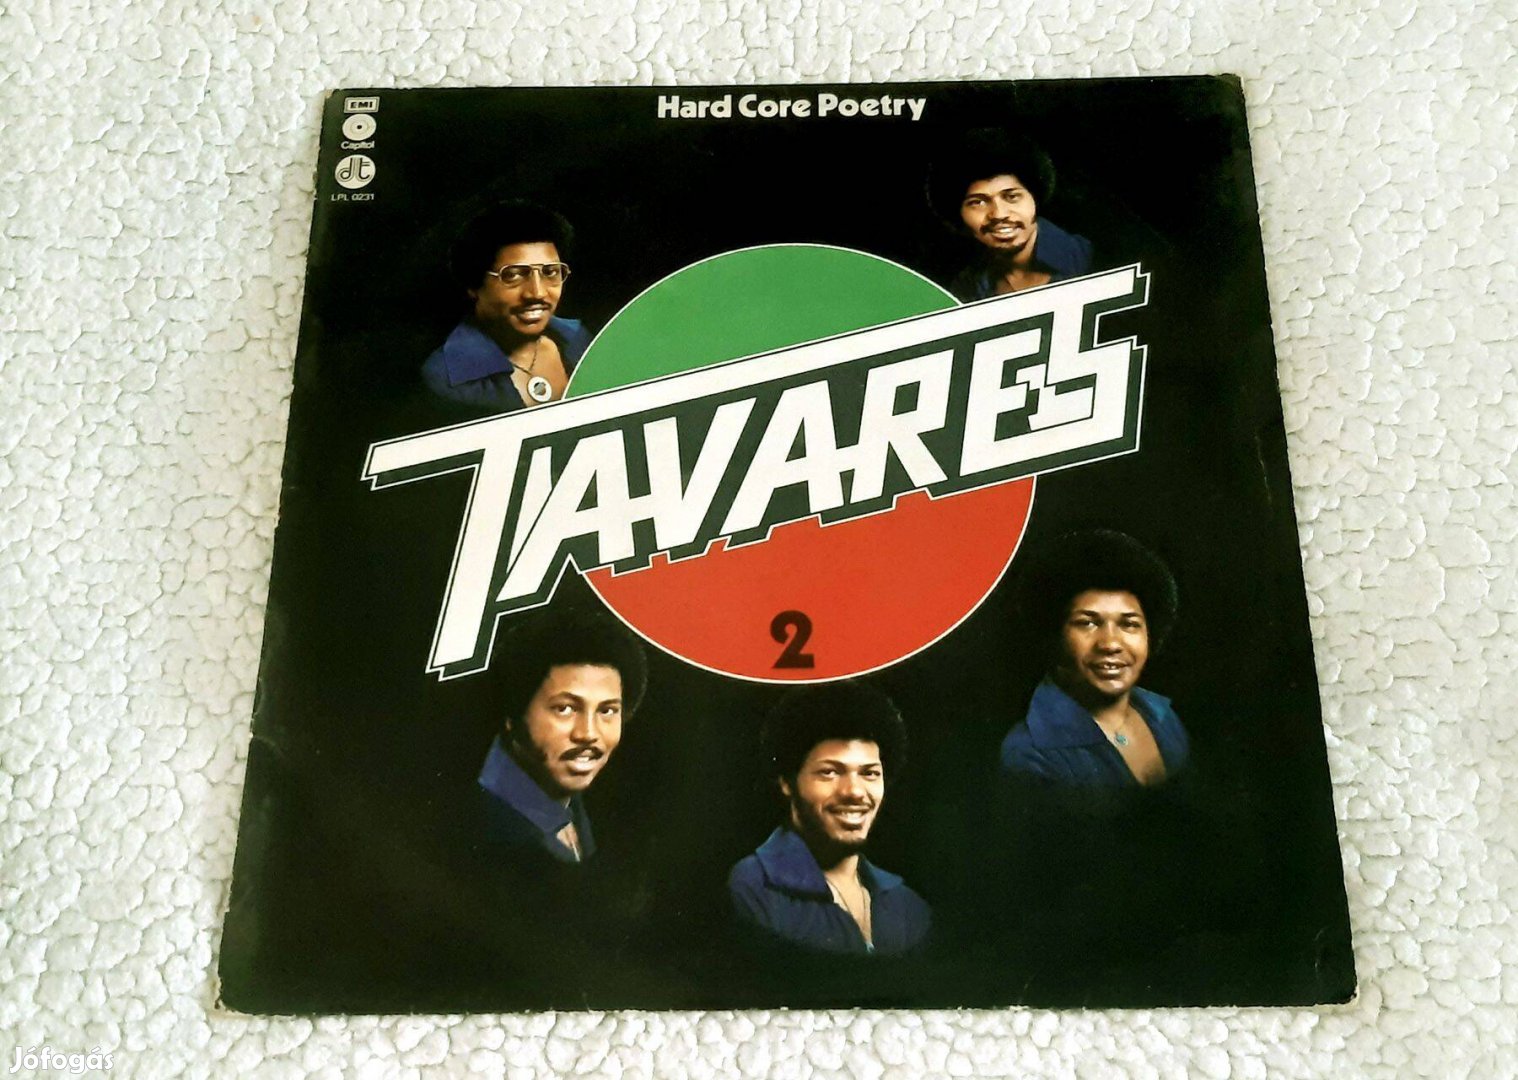 Tavares, "Hard Core Poetry", Lp, hanglemez, bakelit lemezek